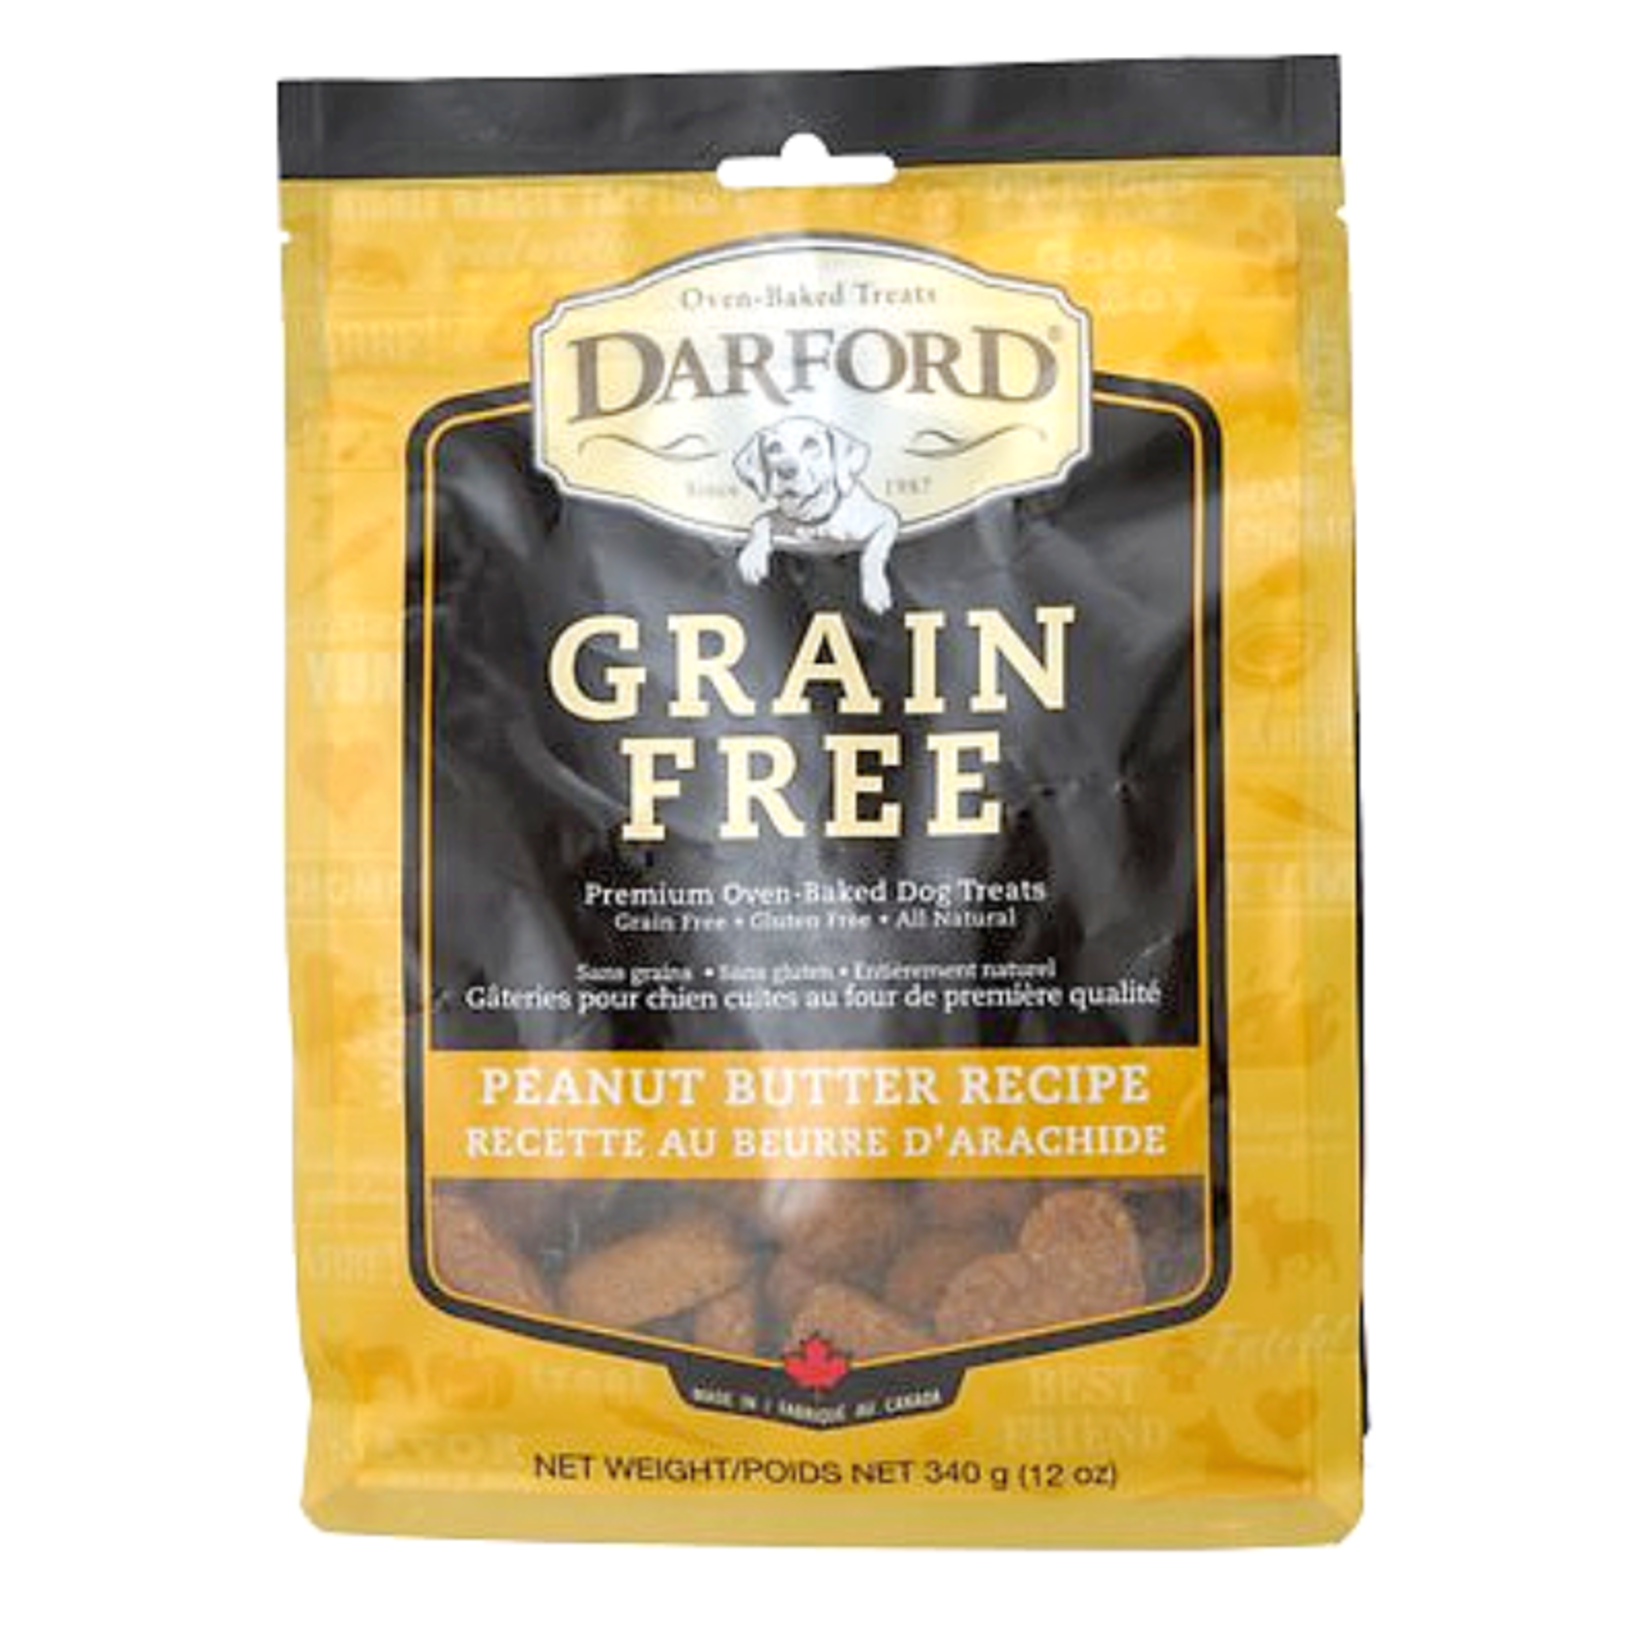 Darford 12 oz. - Peanut Butter Recipe - Grain-Free Dog Treats - Darford